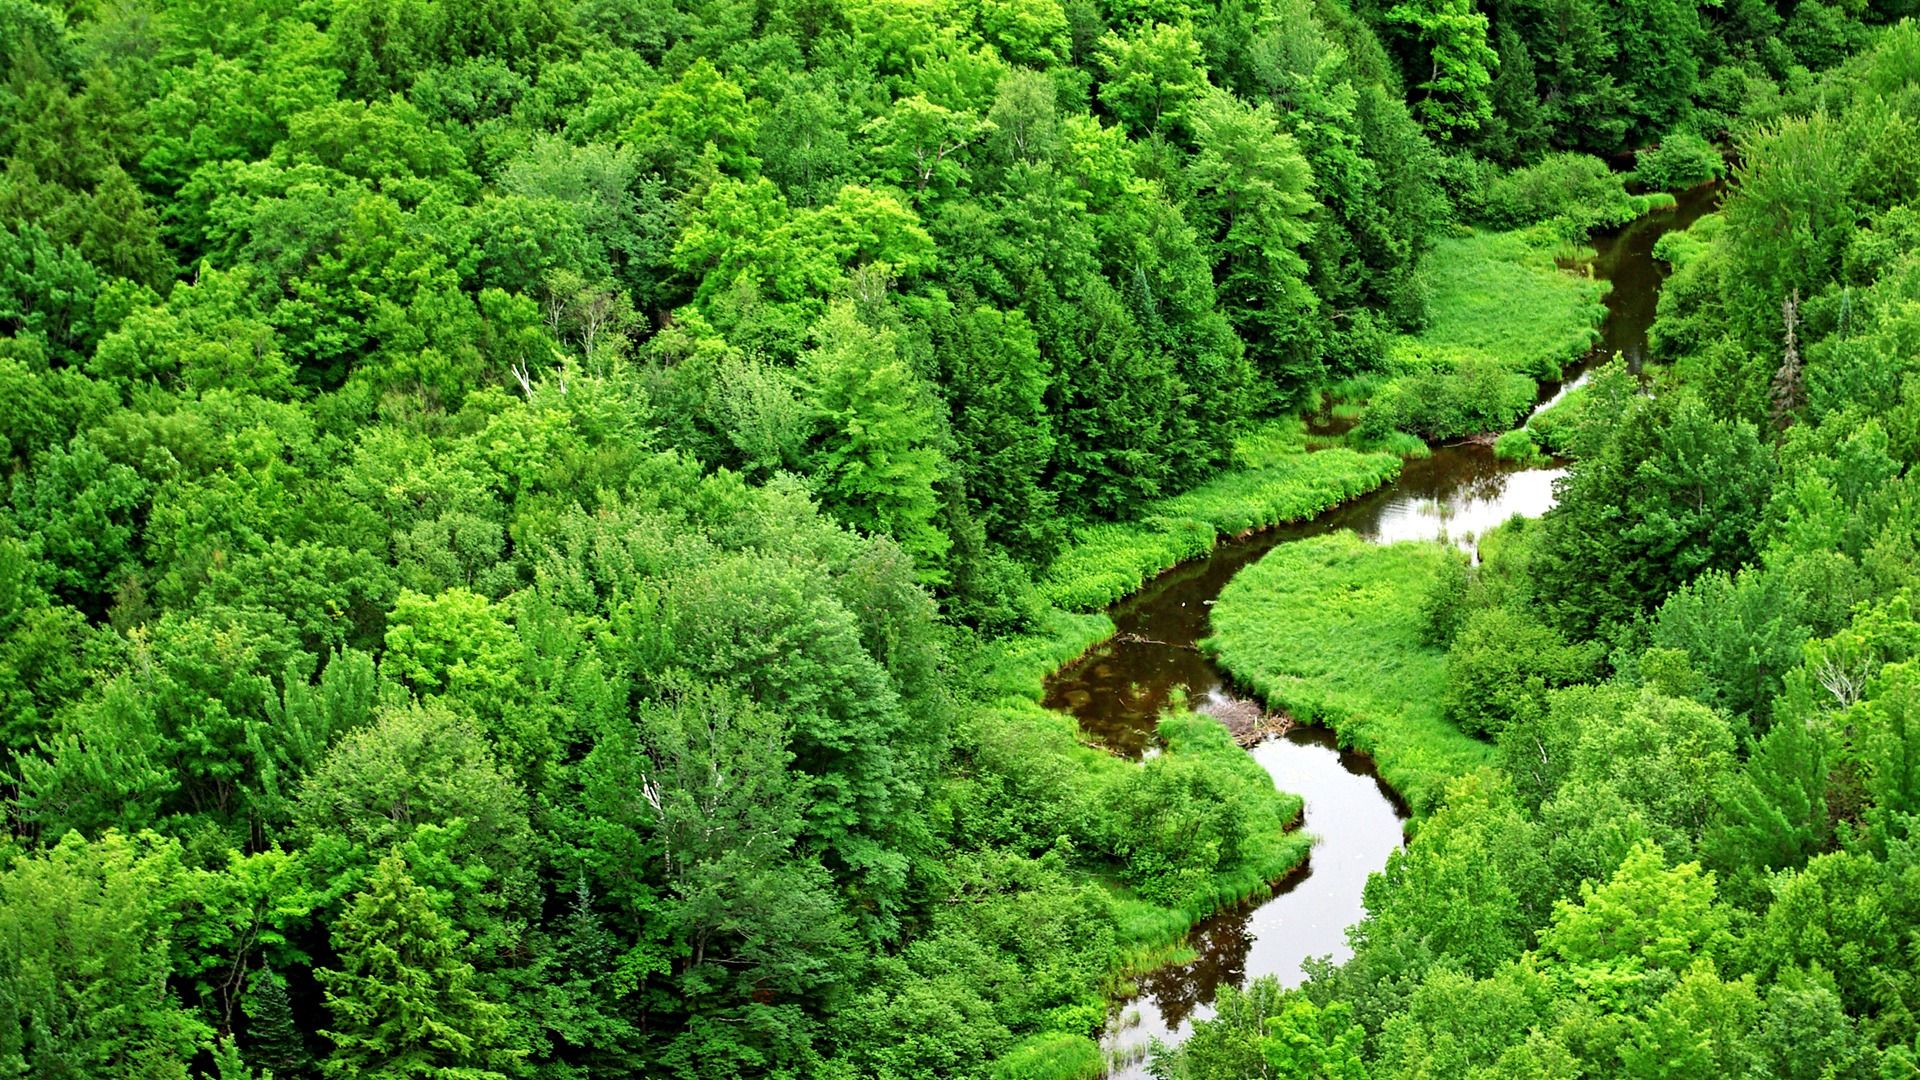 Meandering Stream Wallpaper Landscape Nature Wallpaper in jpg format for free download